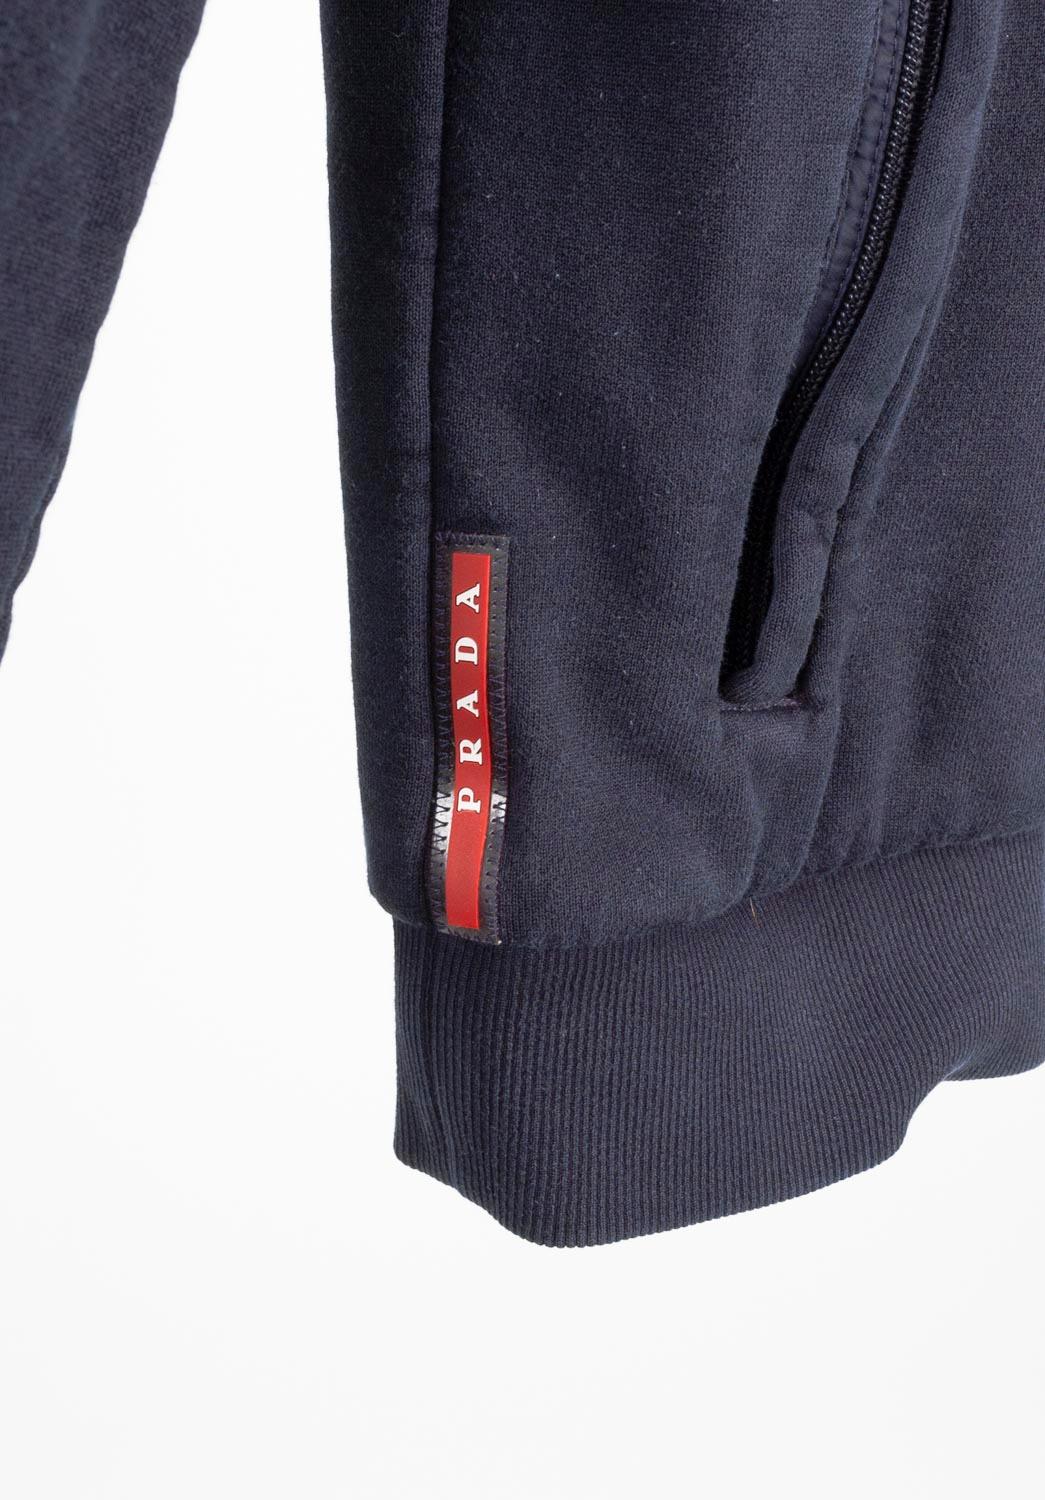  Prada Homme Veste Sweatshirt Light Zippée Hooded Taille M, S662 en vente 2